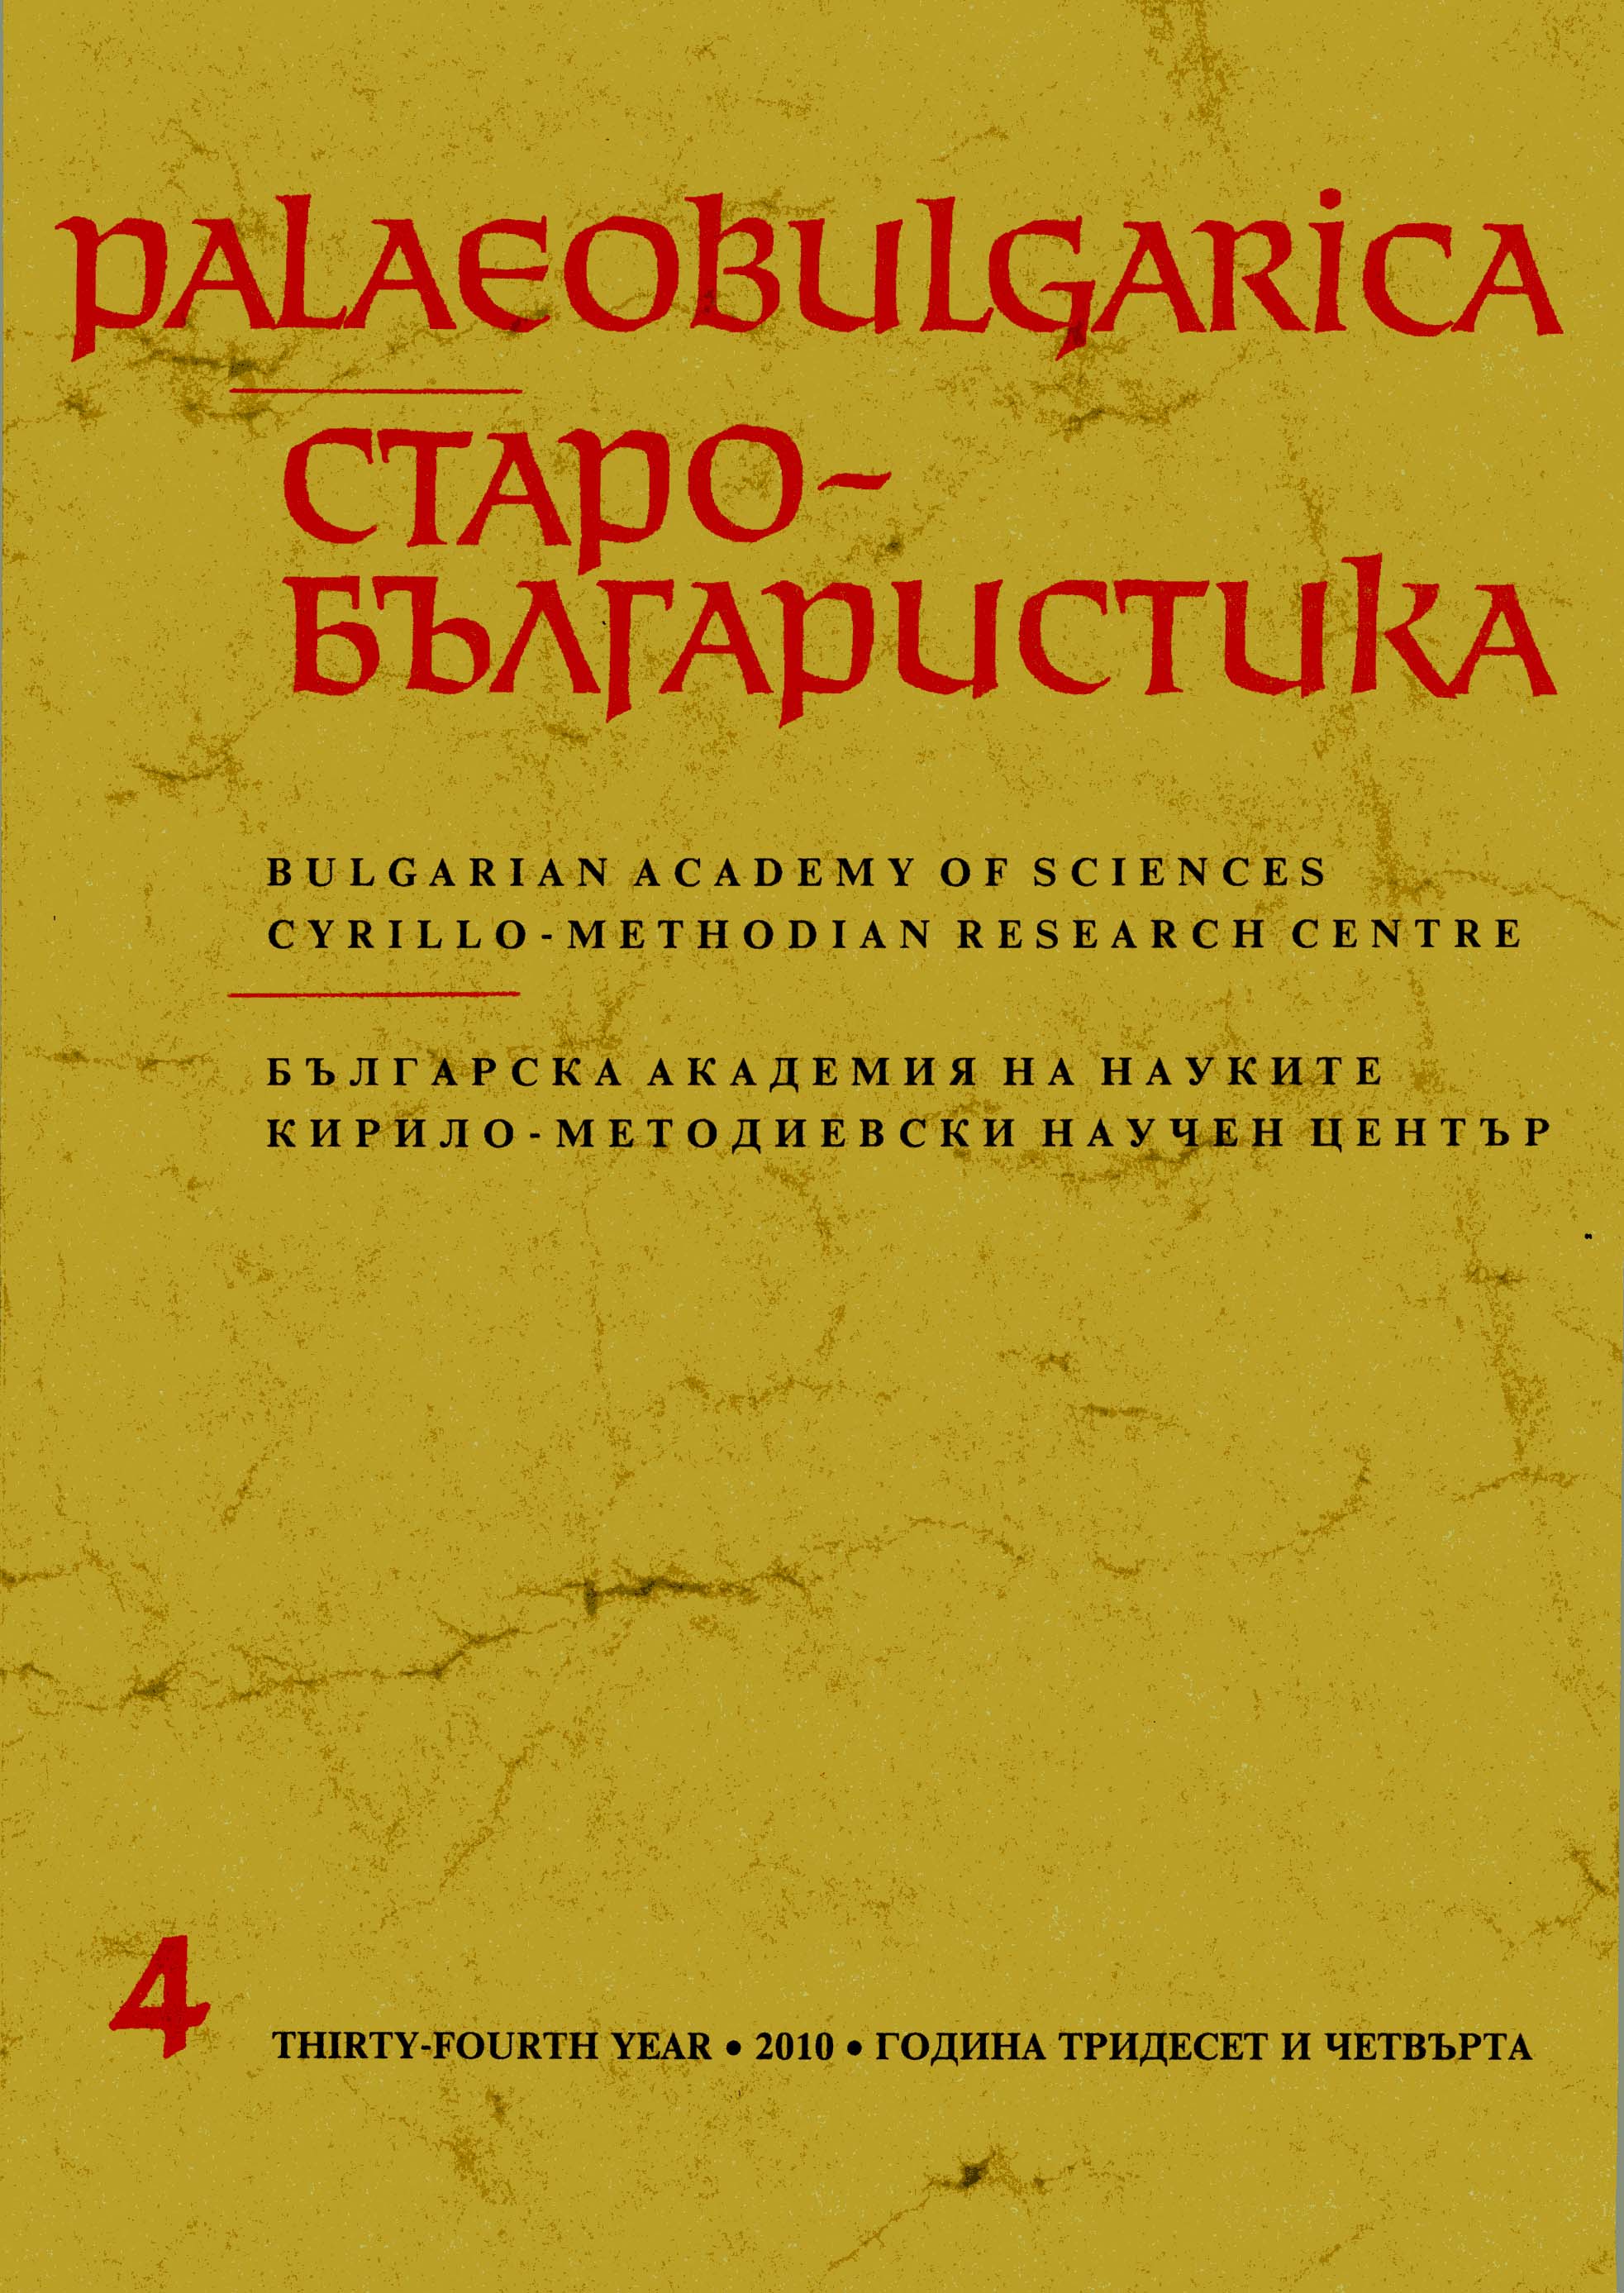 The International Symposium “St. Nahum - Activity, Associates and Adherents" Cover Image